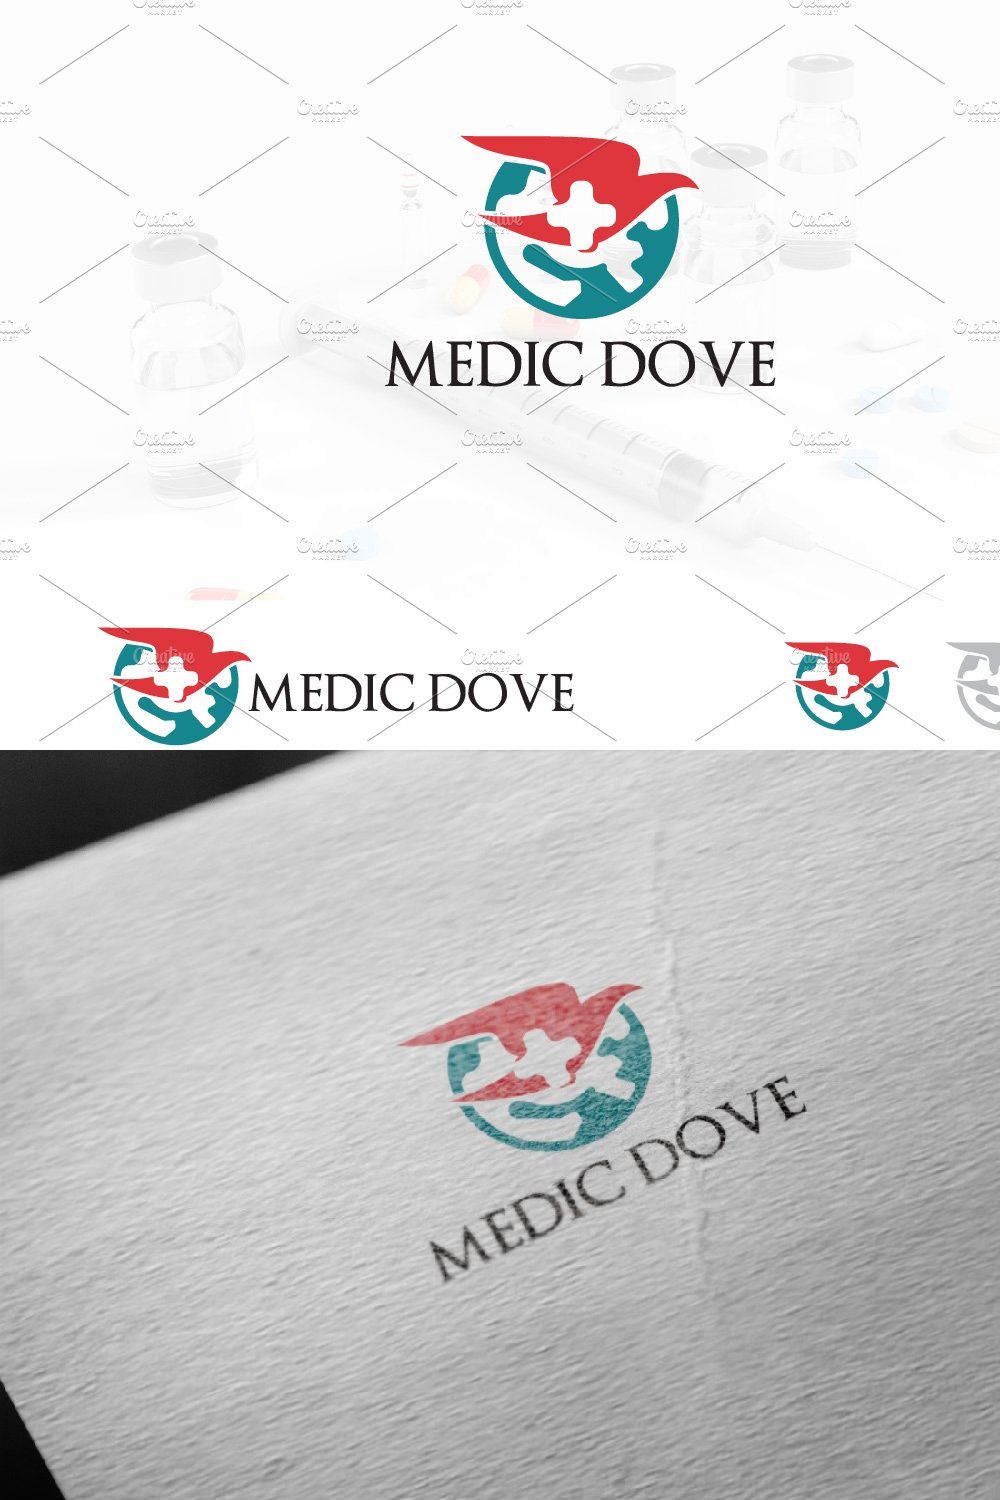 Flying Dove Global Health Logo pinterest preview image.